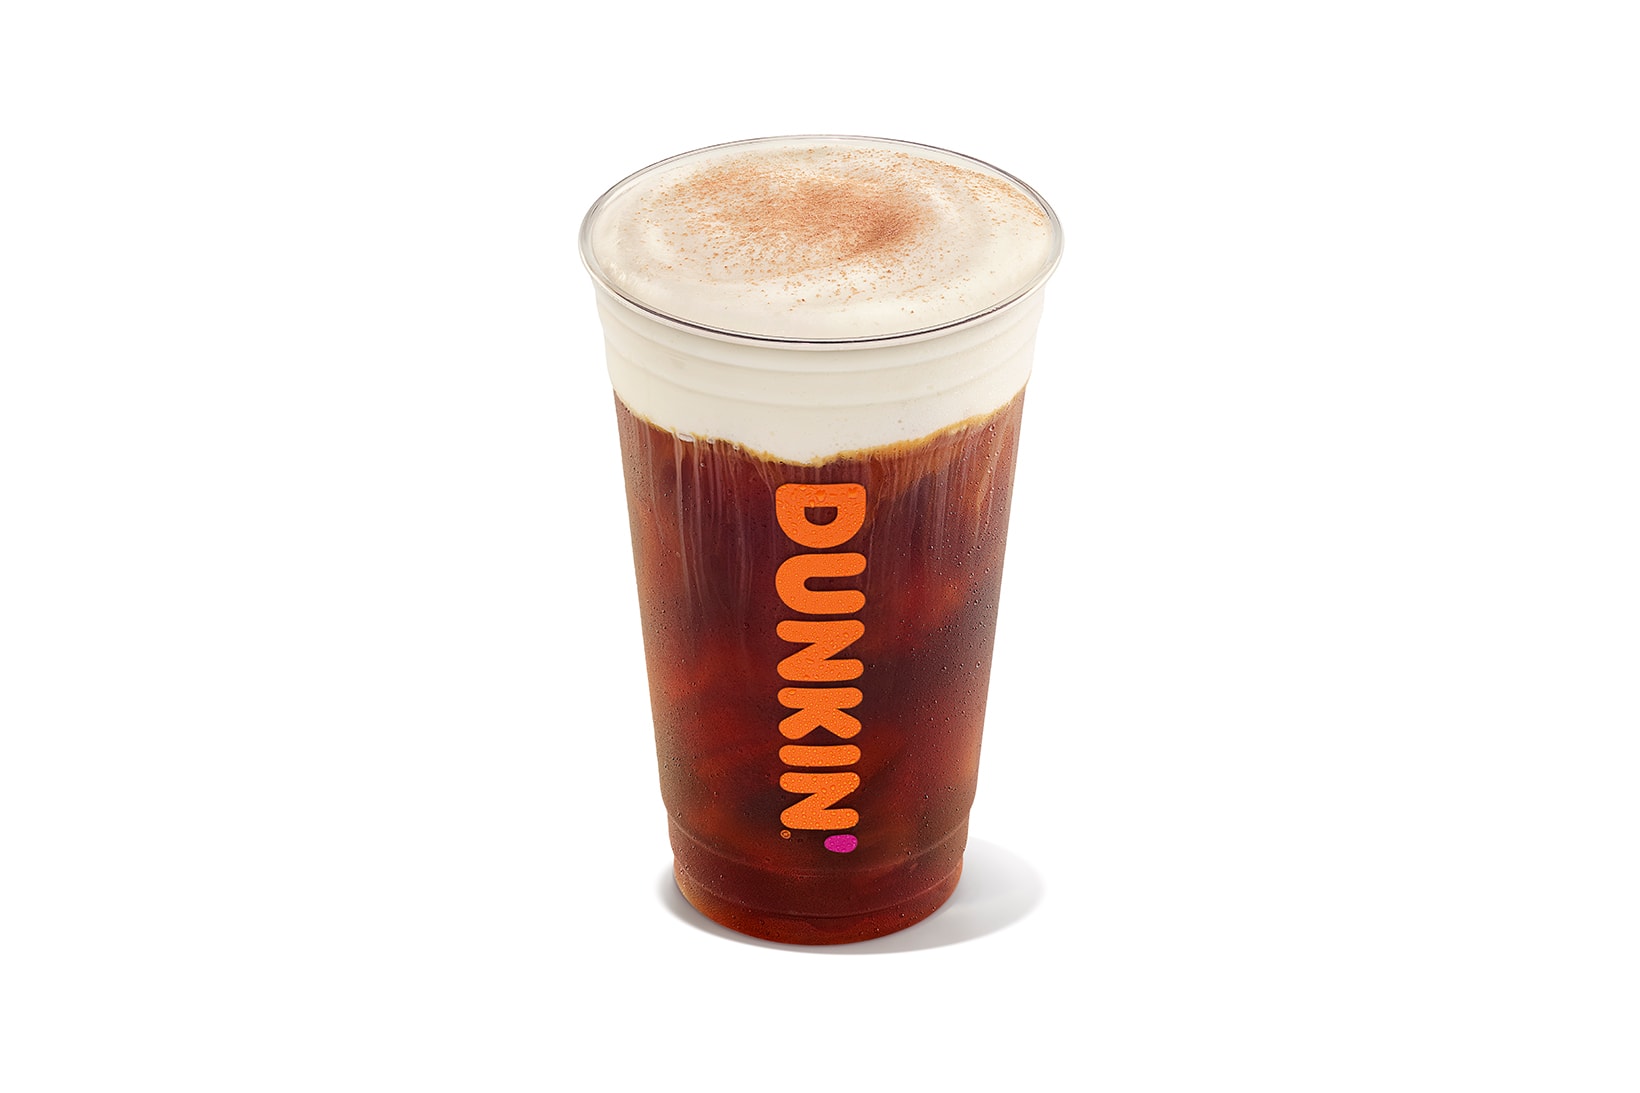 https://image-cdn.hypb.st/https%3A%2F%2Fhypebeast.com%2Fwp-content%2Fblogs.dir%2F6%2Ffiles%2F2021%2F06%2Fdunkin-donut-summer-menu-sunrise-batch-iced-coffee-smoked-vanilla-cold-brew-sweet-cold-foam-vanilla-latte-release-1.jpg?cbr=1&q=90